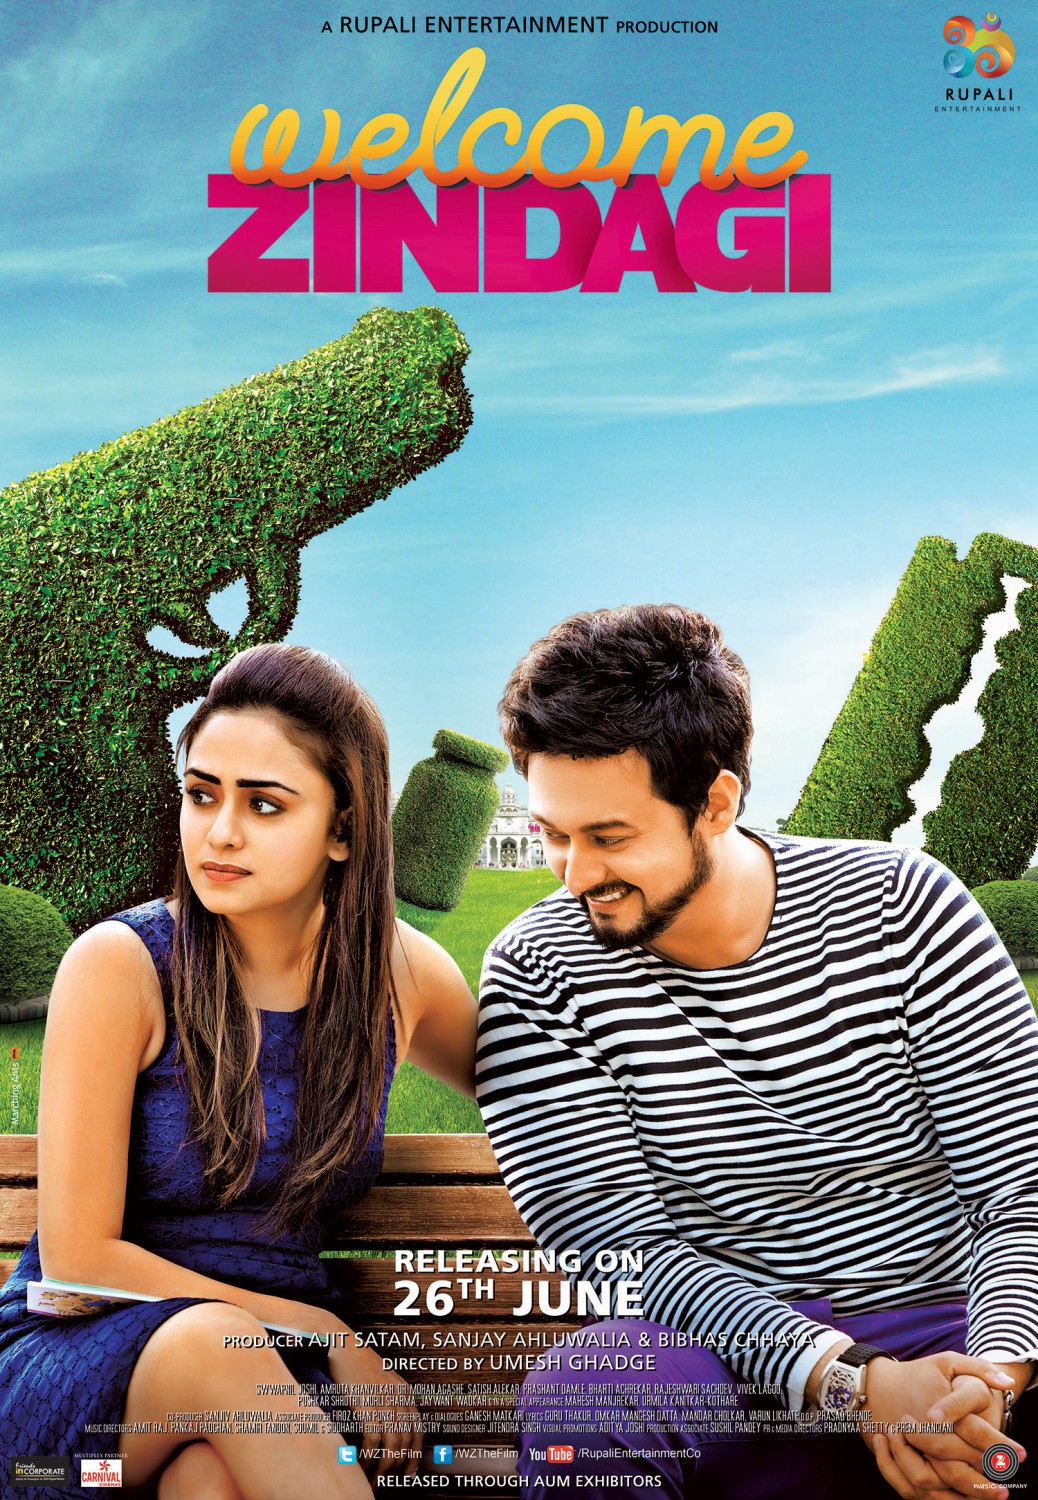 Extra Large Movie Poster Image for Welcome Zindagi (#2 of 4)